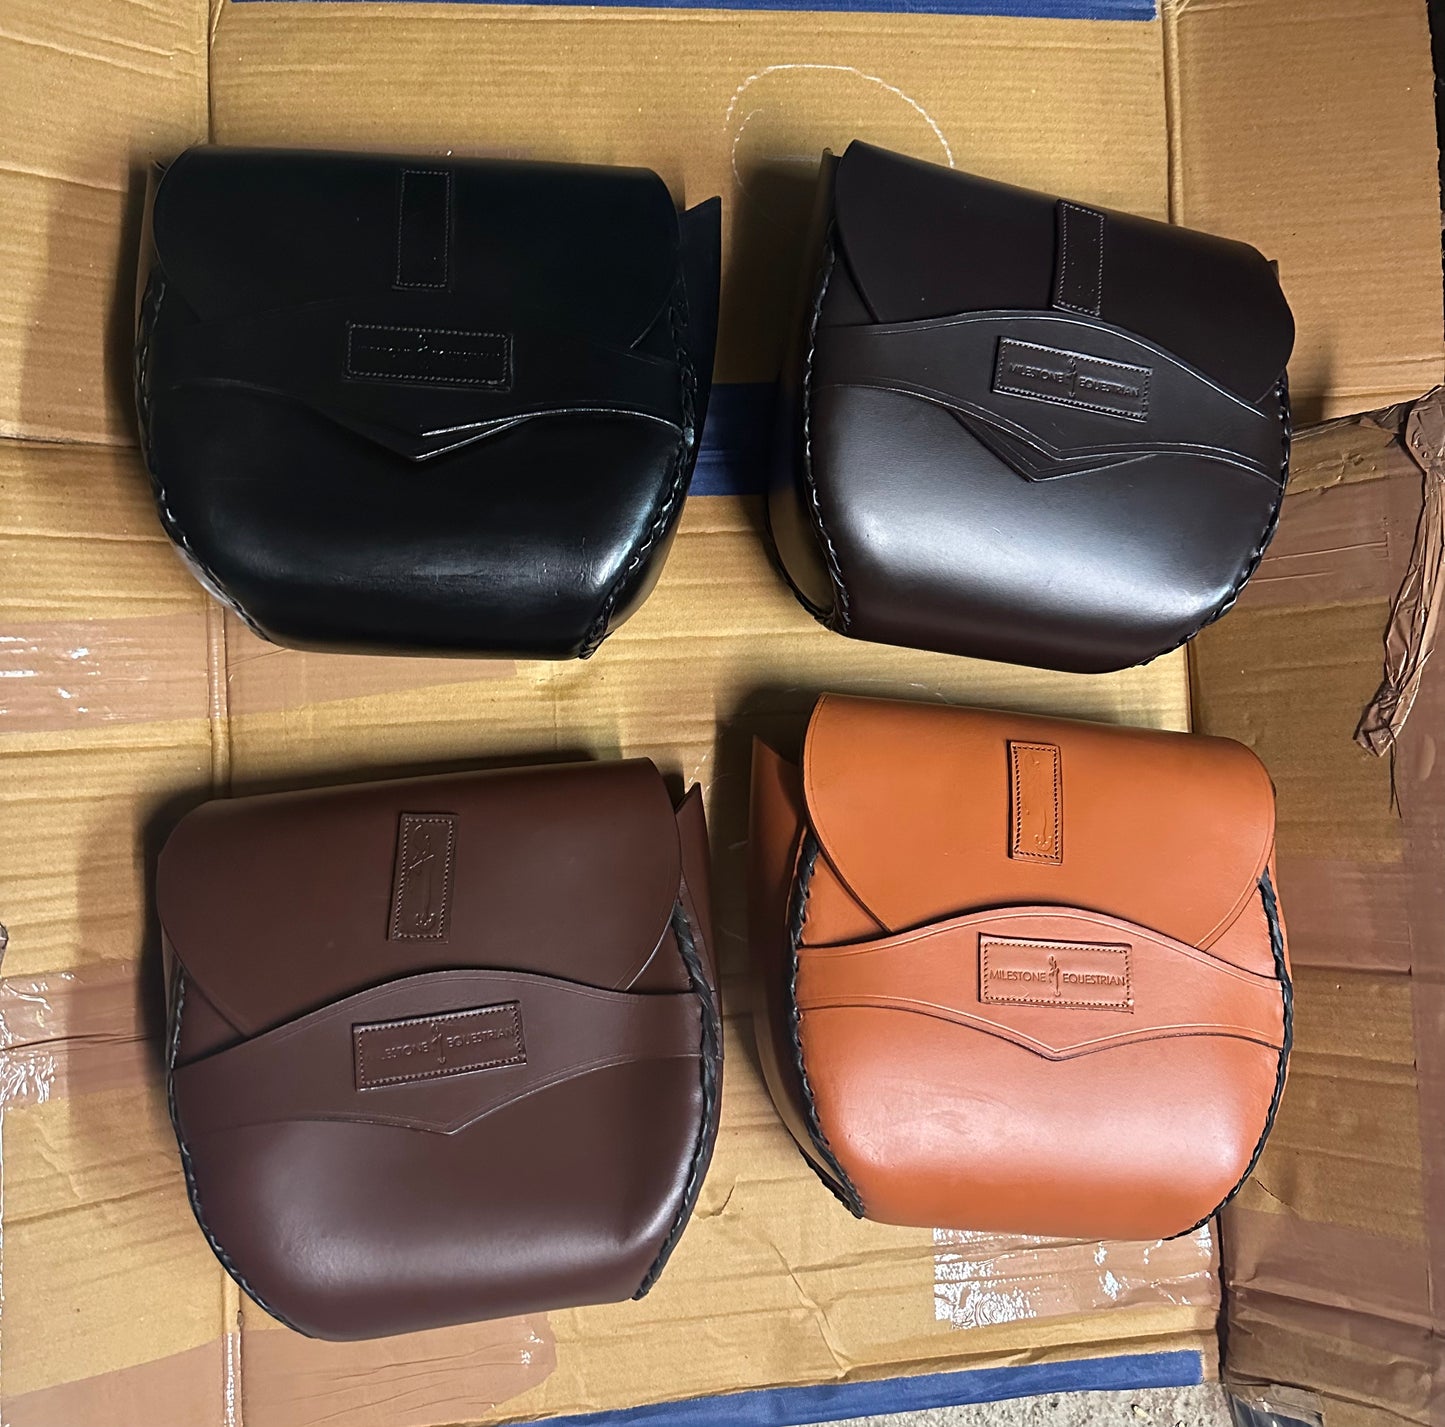 Leather Treat Bag